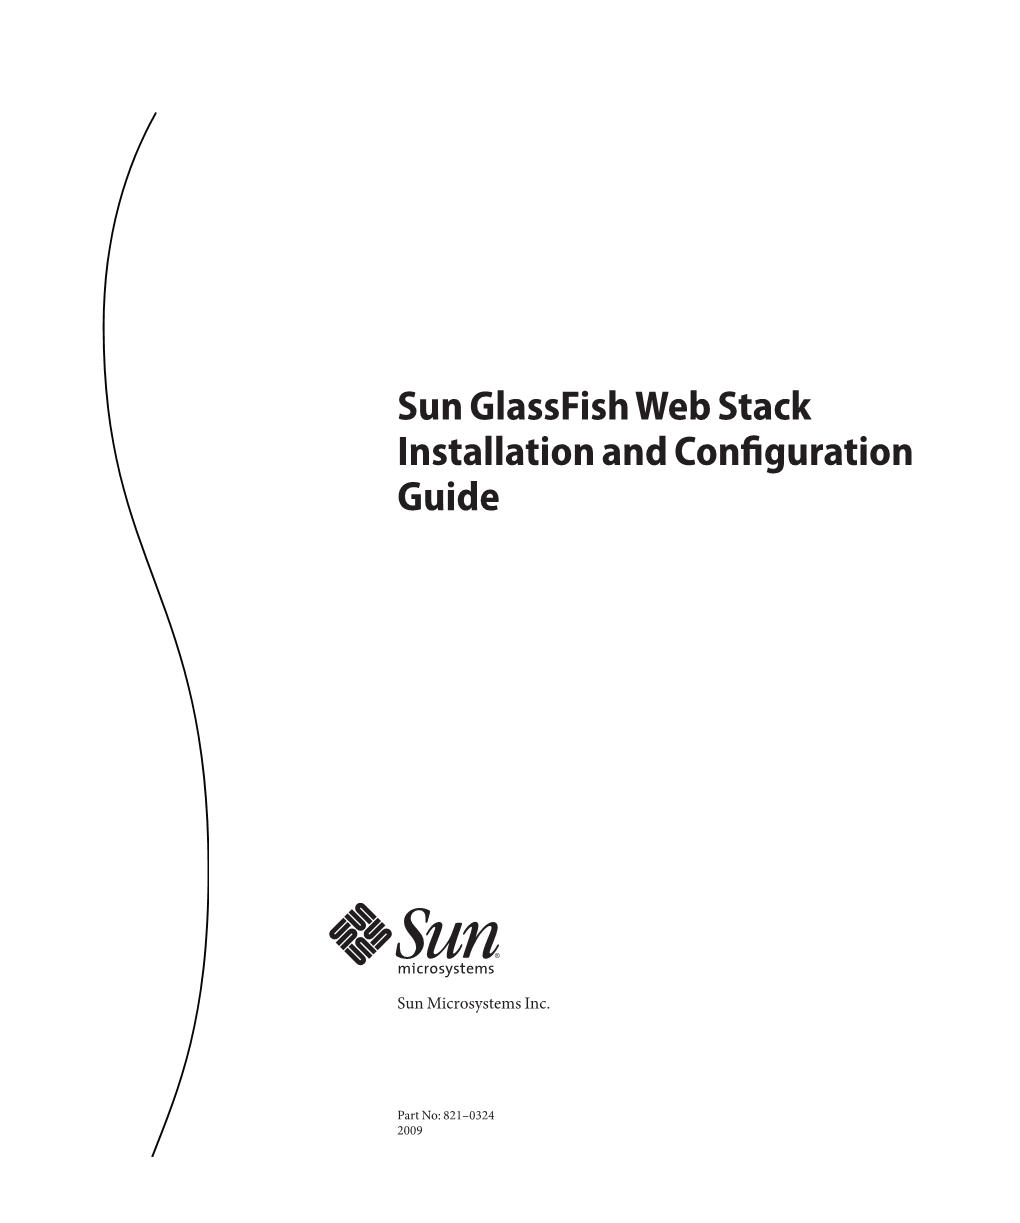 Sun Glassfish Web Stack Installation and Configuration Guide